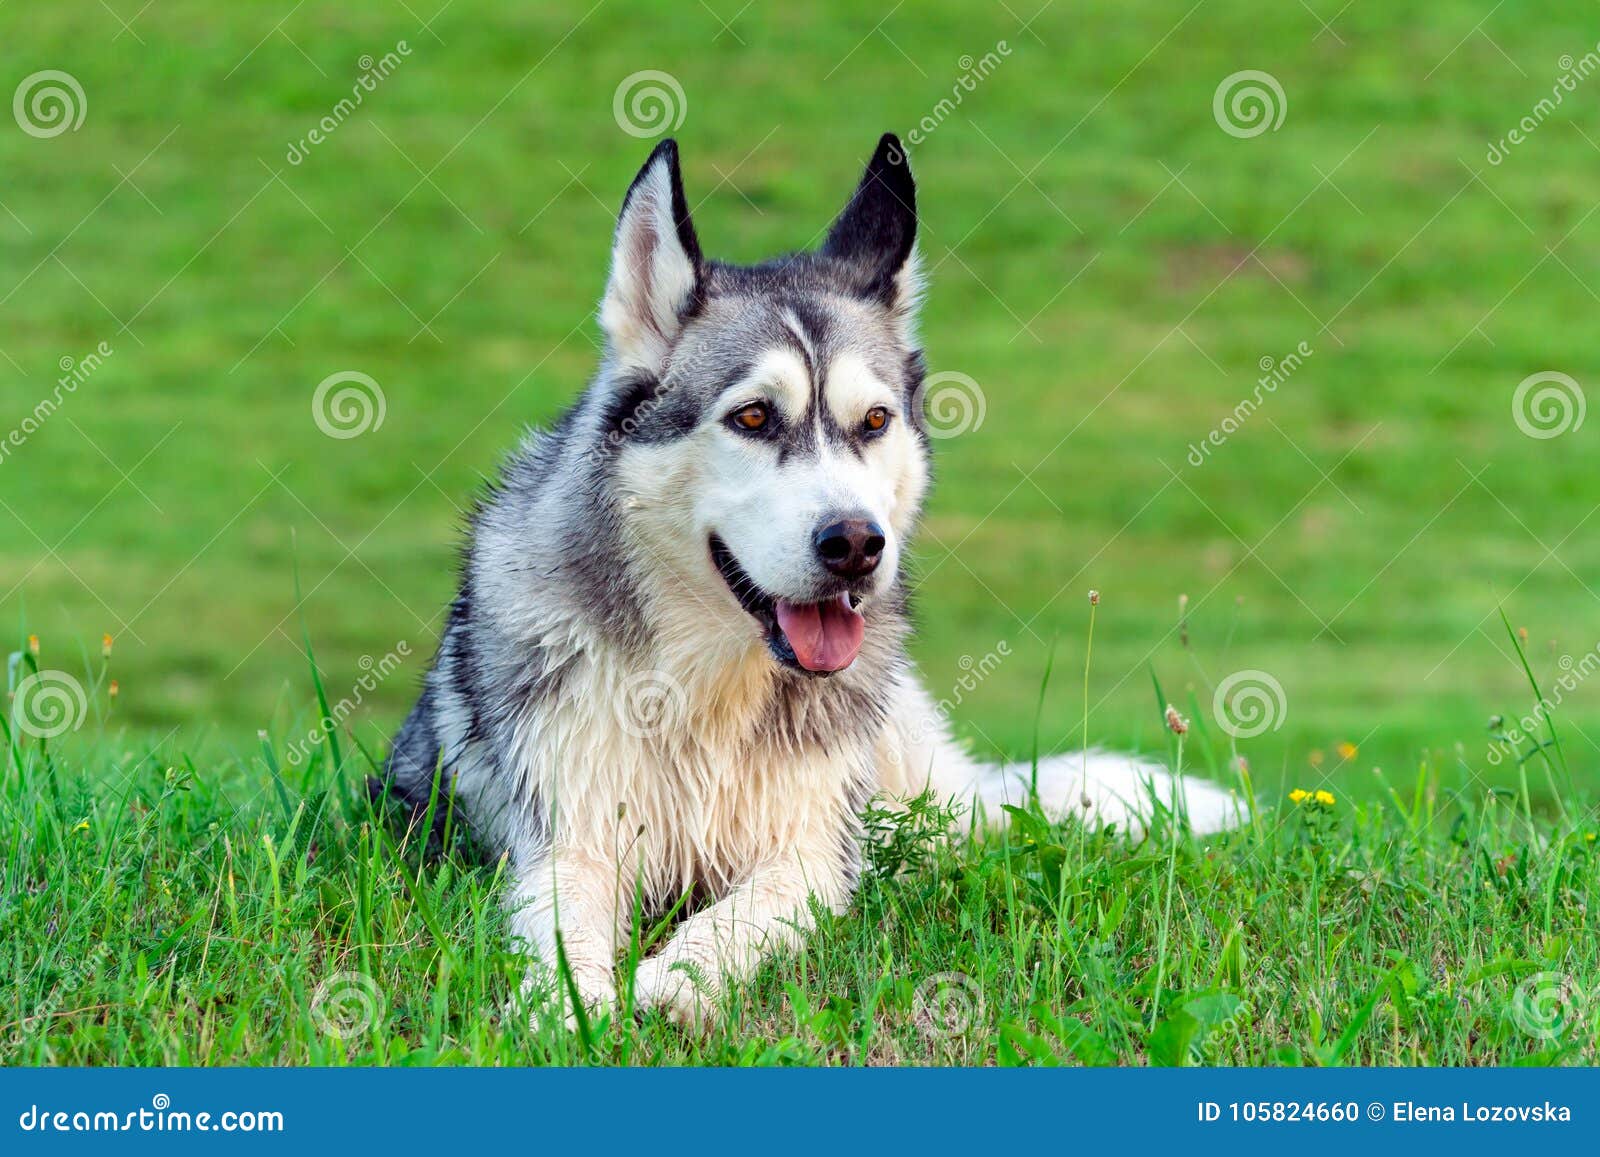 Adult Dog Breed Alaskan Malamute is on the Field Stock Photo - Image of  darling, malamute: 105824660